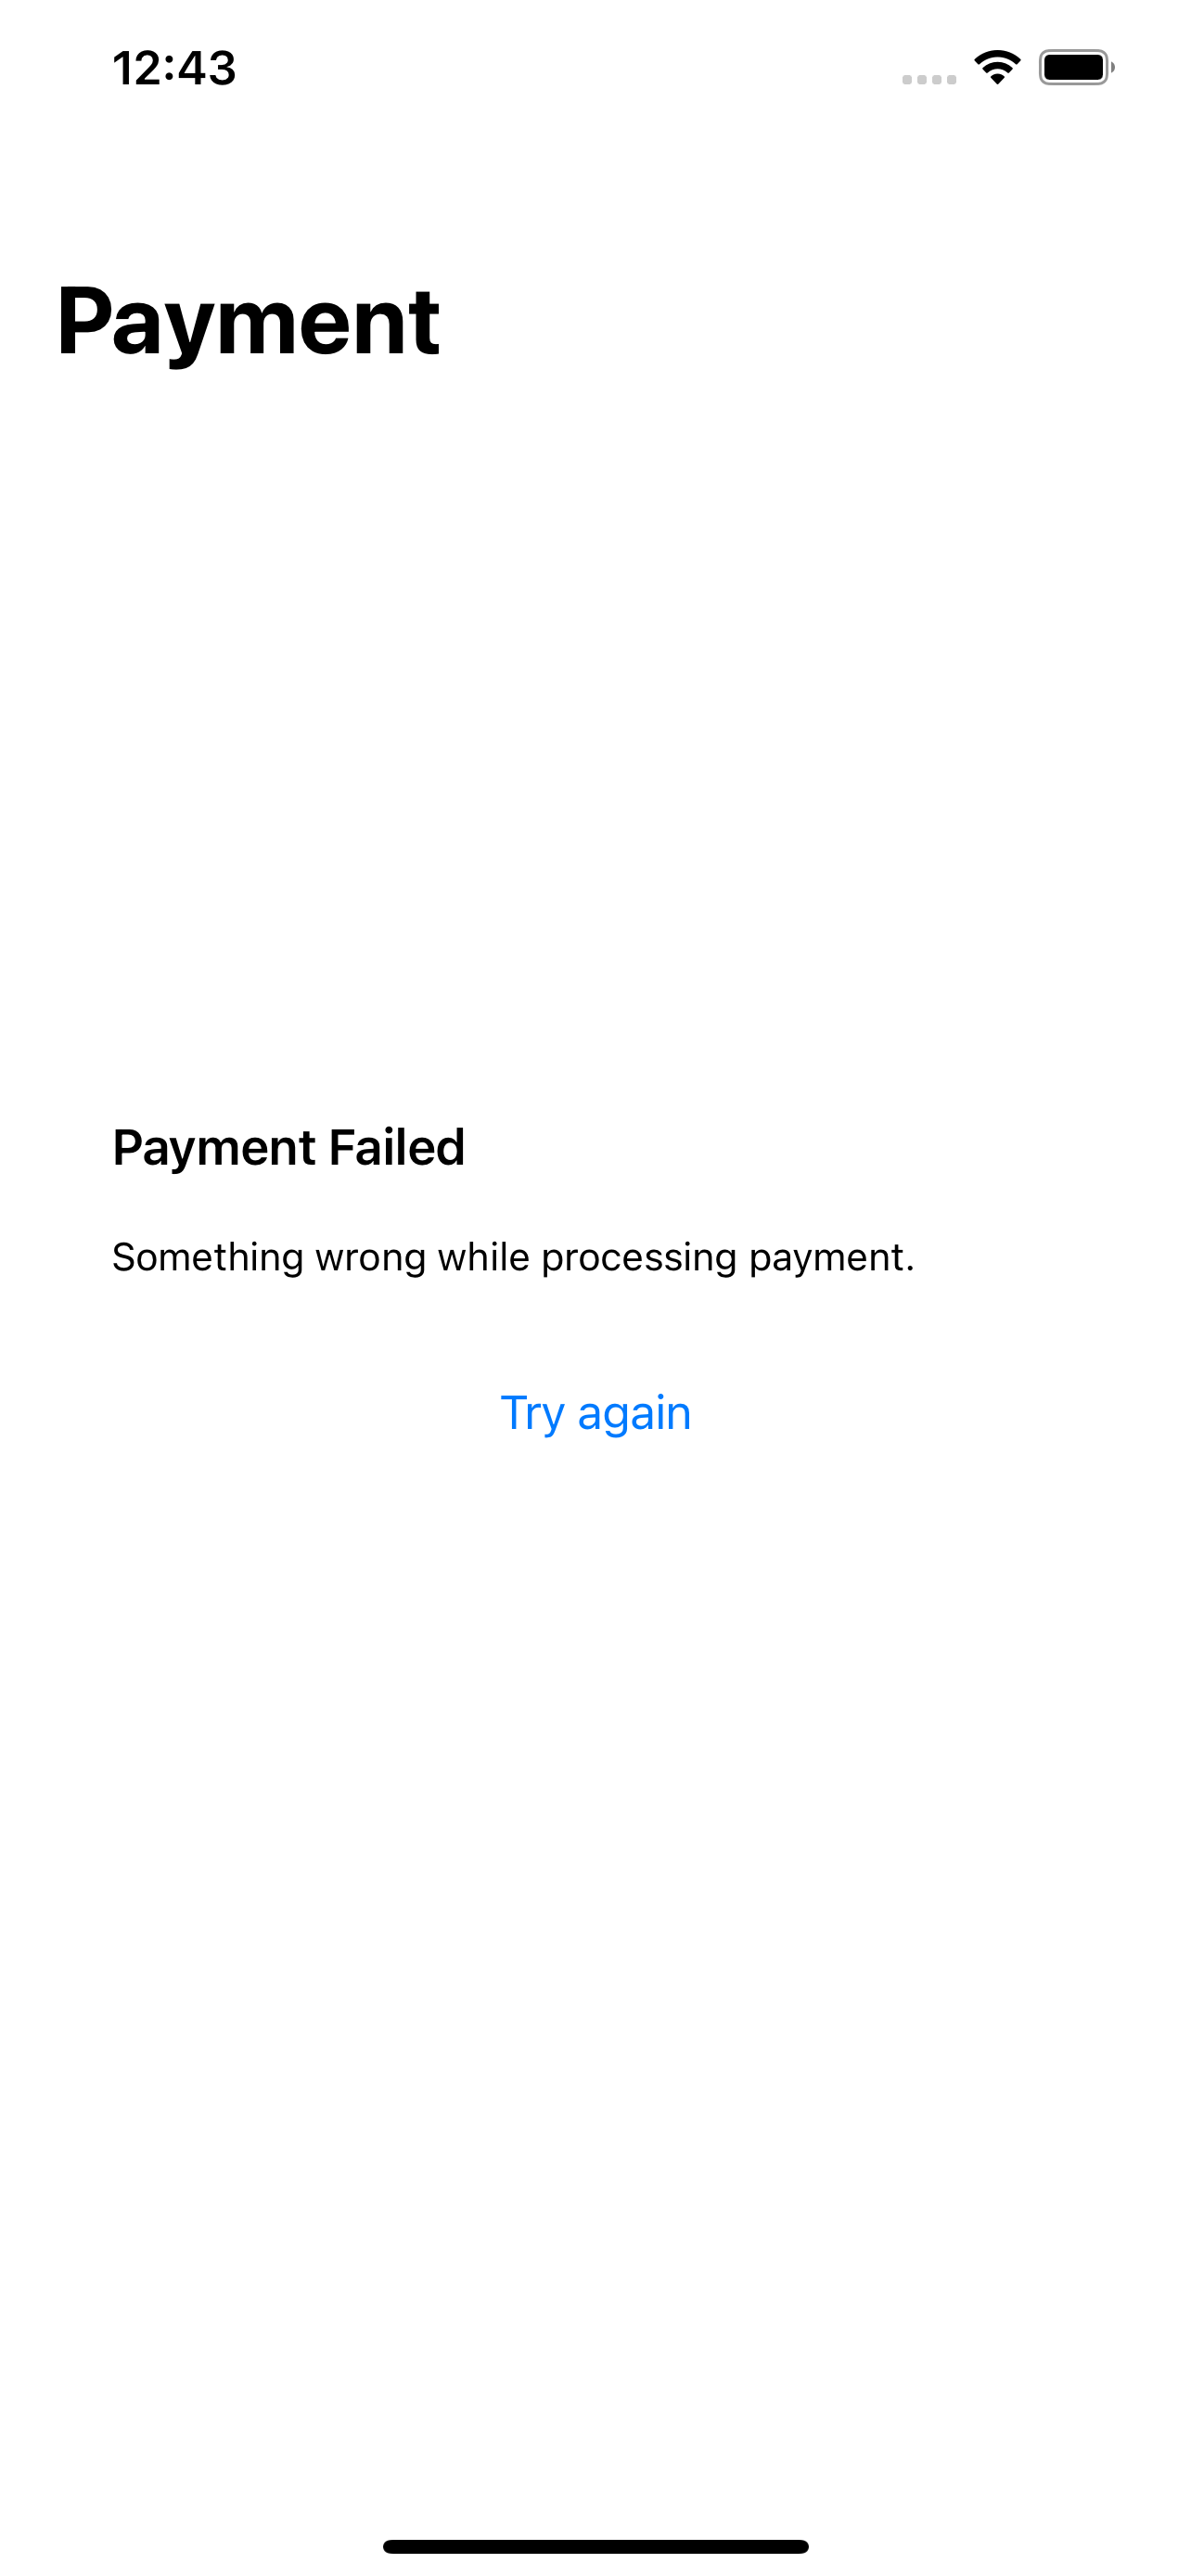 Payment Failure Screen